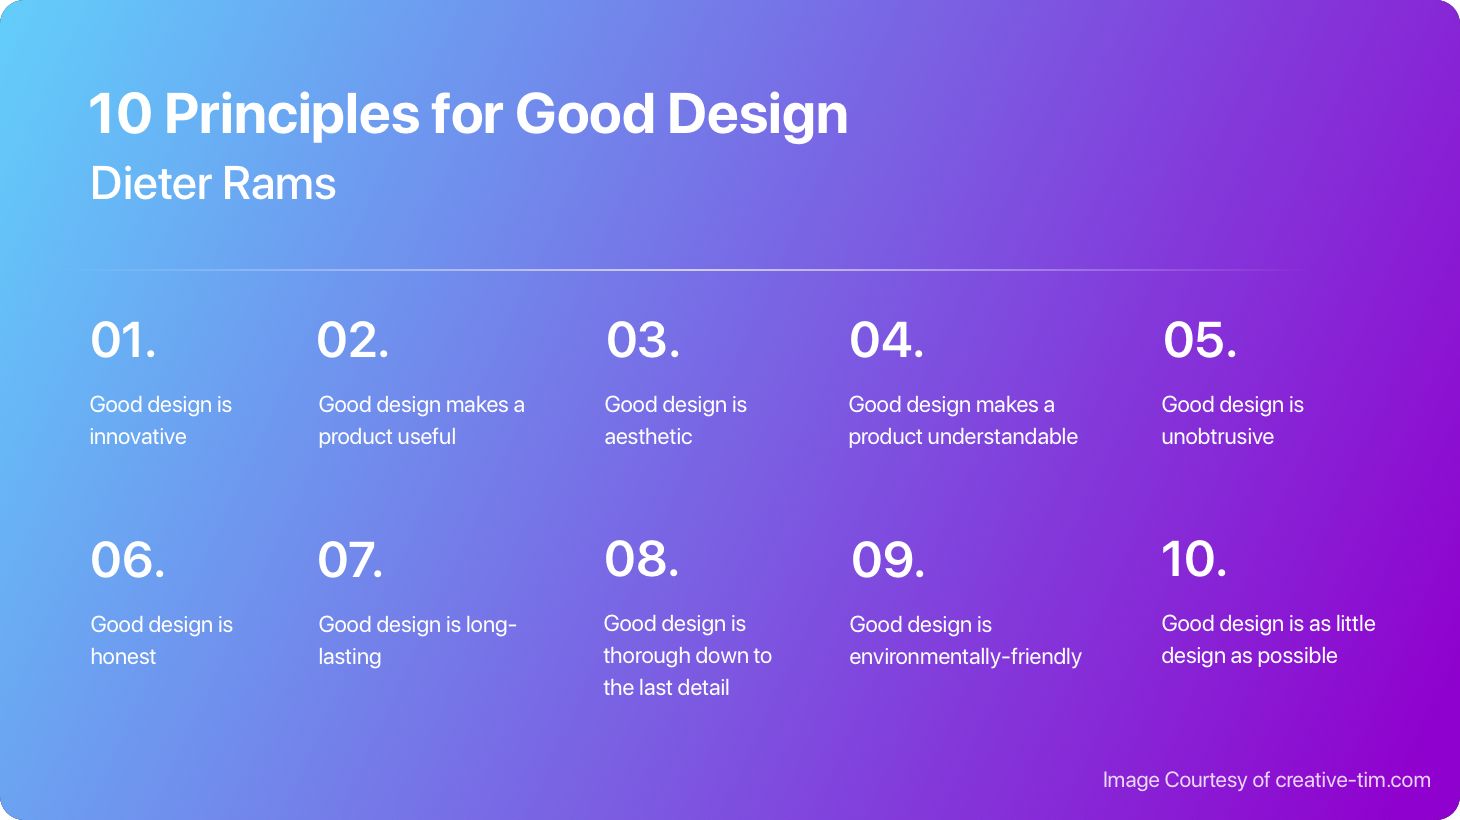 A list of principles for good design.